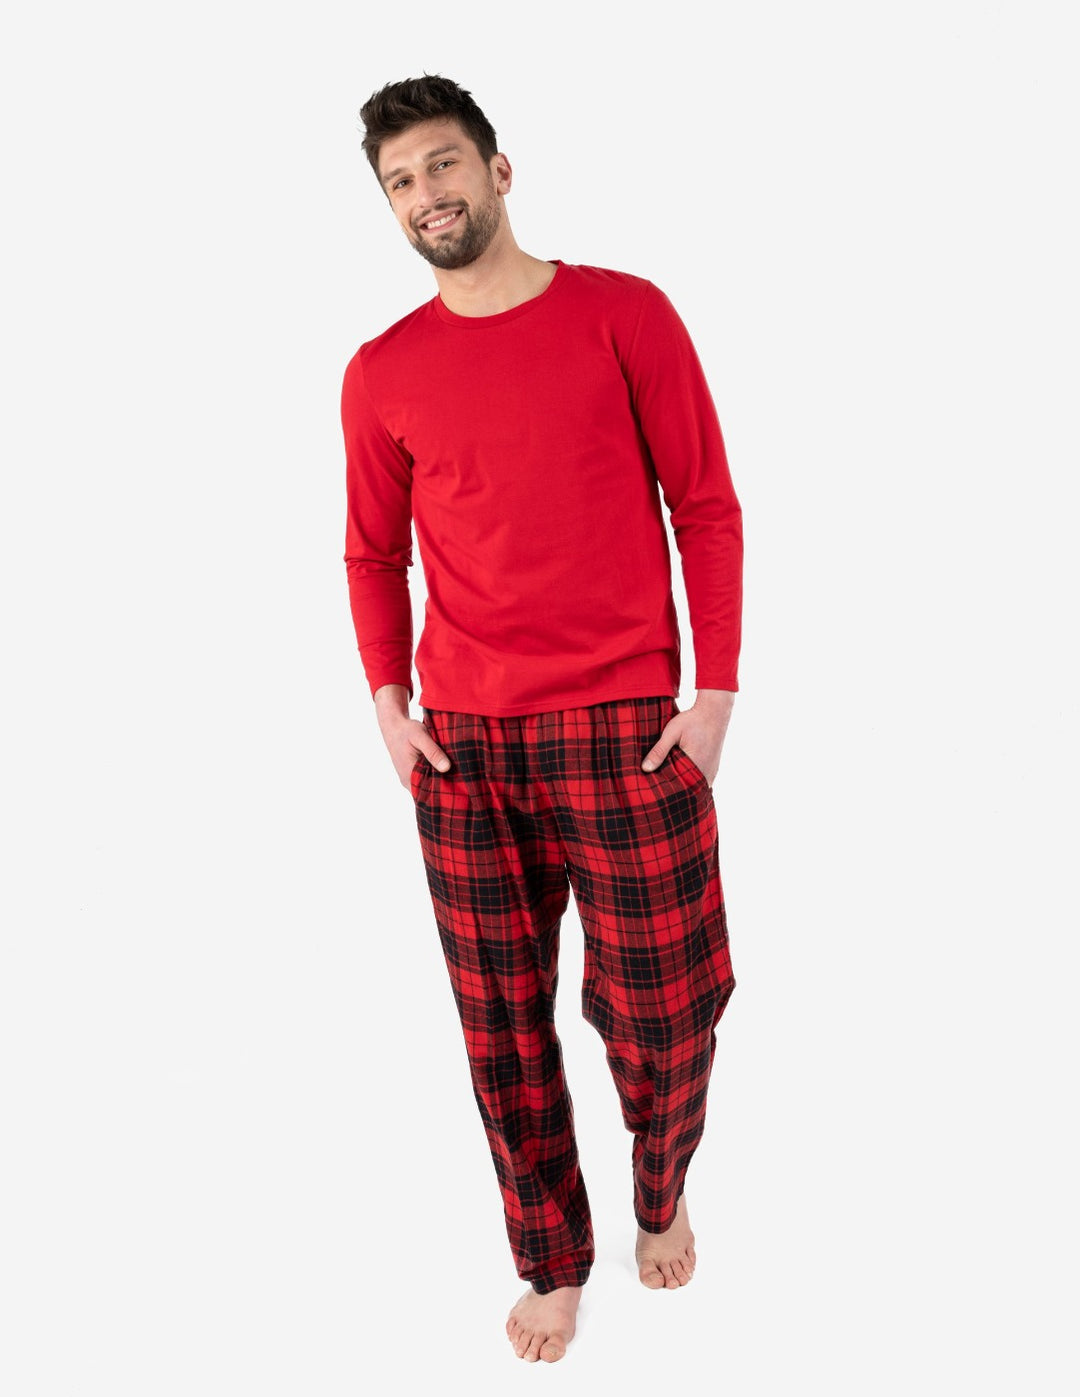 Mens Red Tartan Flannel Pajama